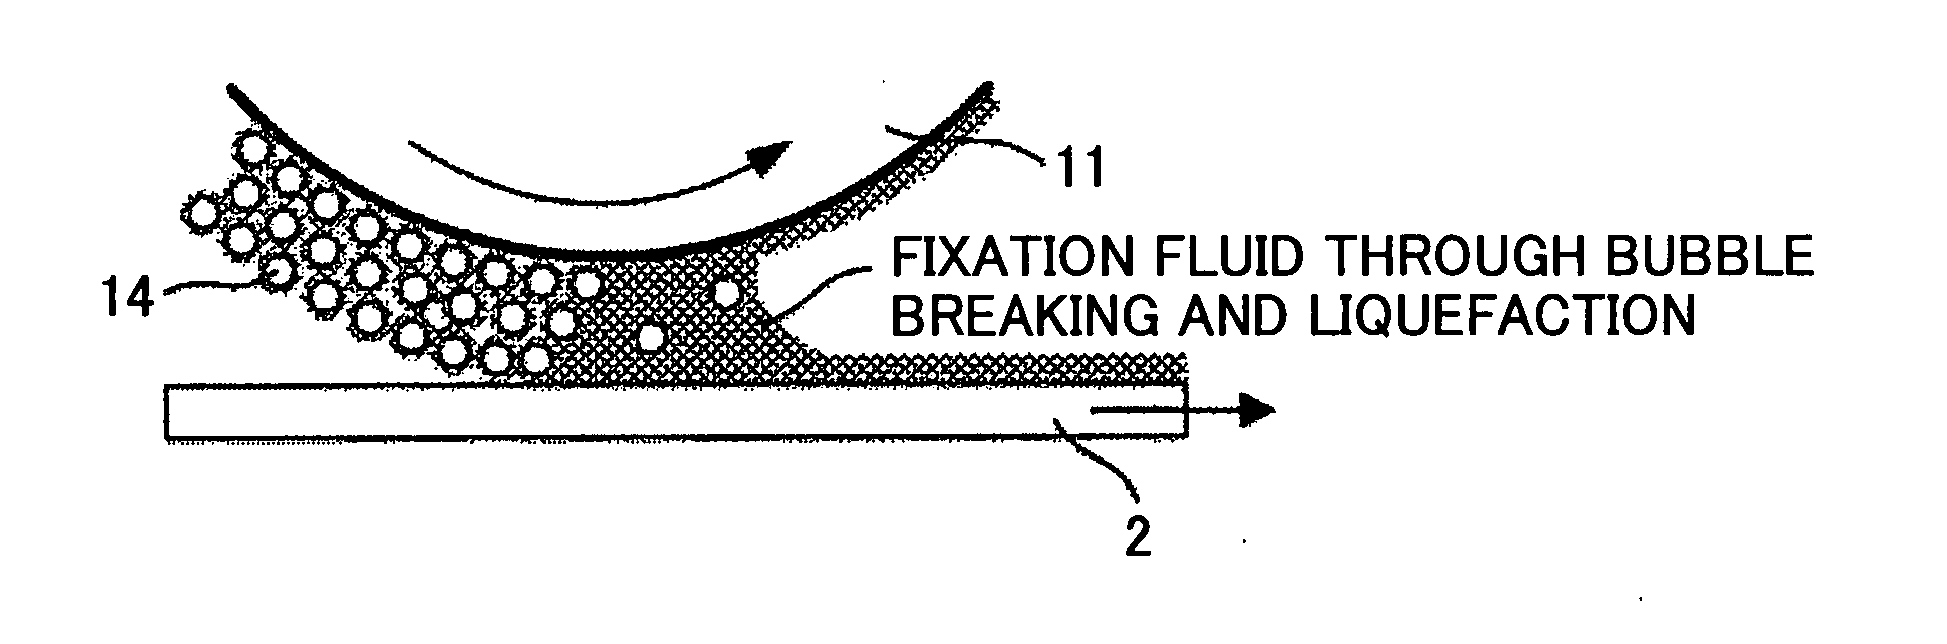 Fixation device, fixation method, image forming apparatus, image forming method and fixation fluid